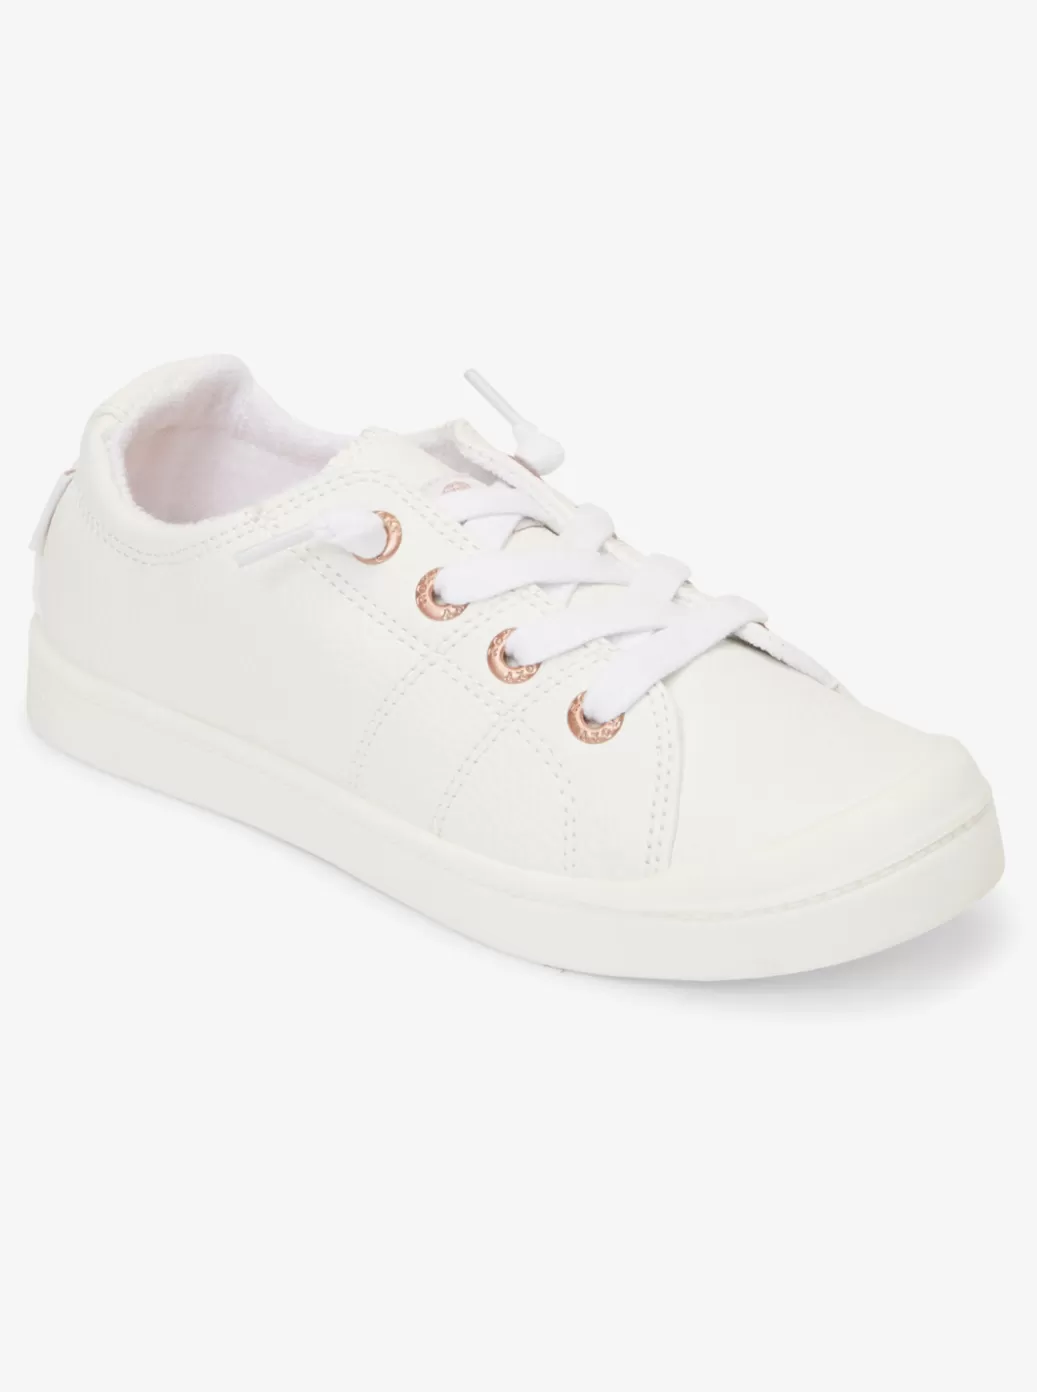 Shoes & Sandals | KIDS ROXY Girl's 4-16 Bayshore Plus Slip-On Shoes White/white